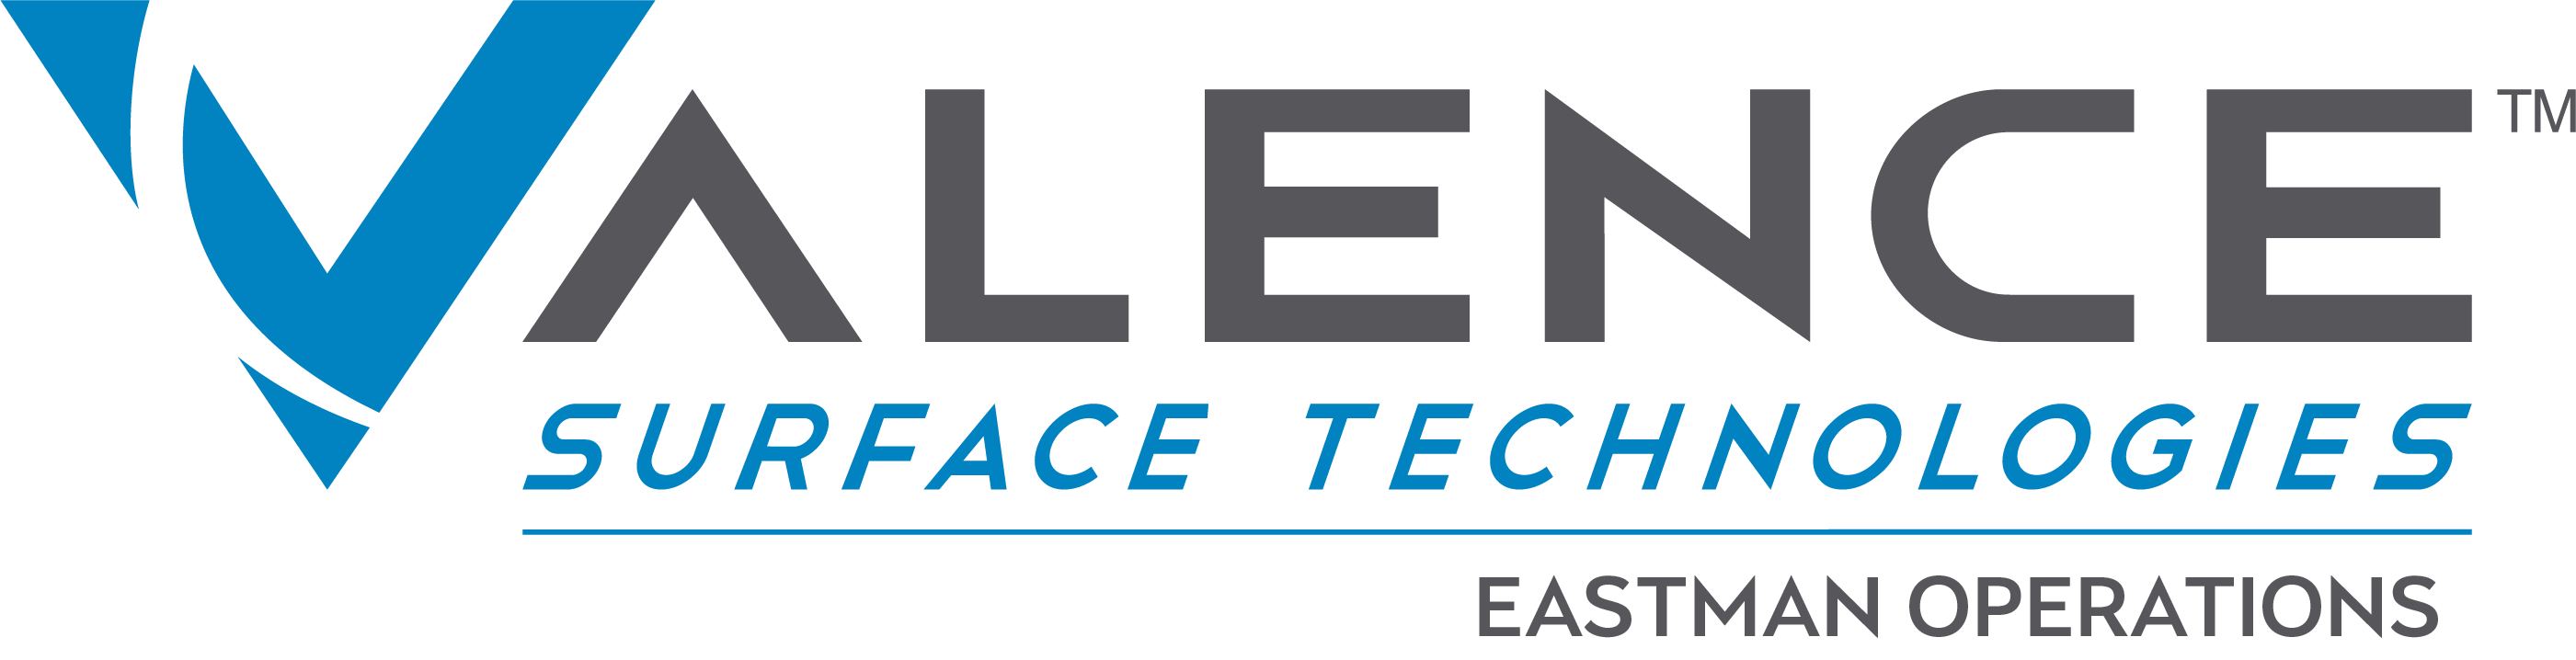 Valence Surface Technologies Eastman Operations Logo